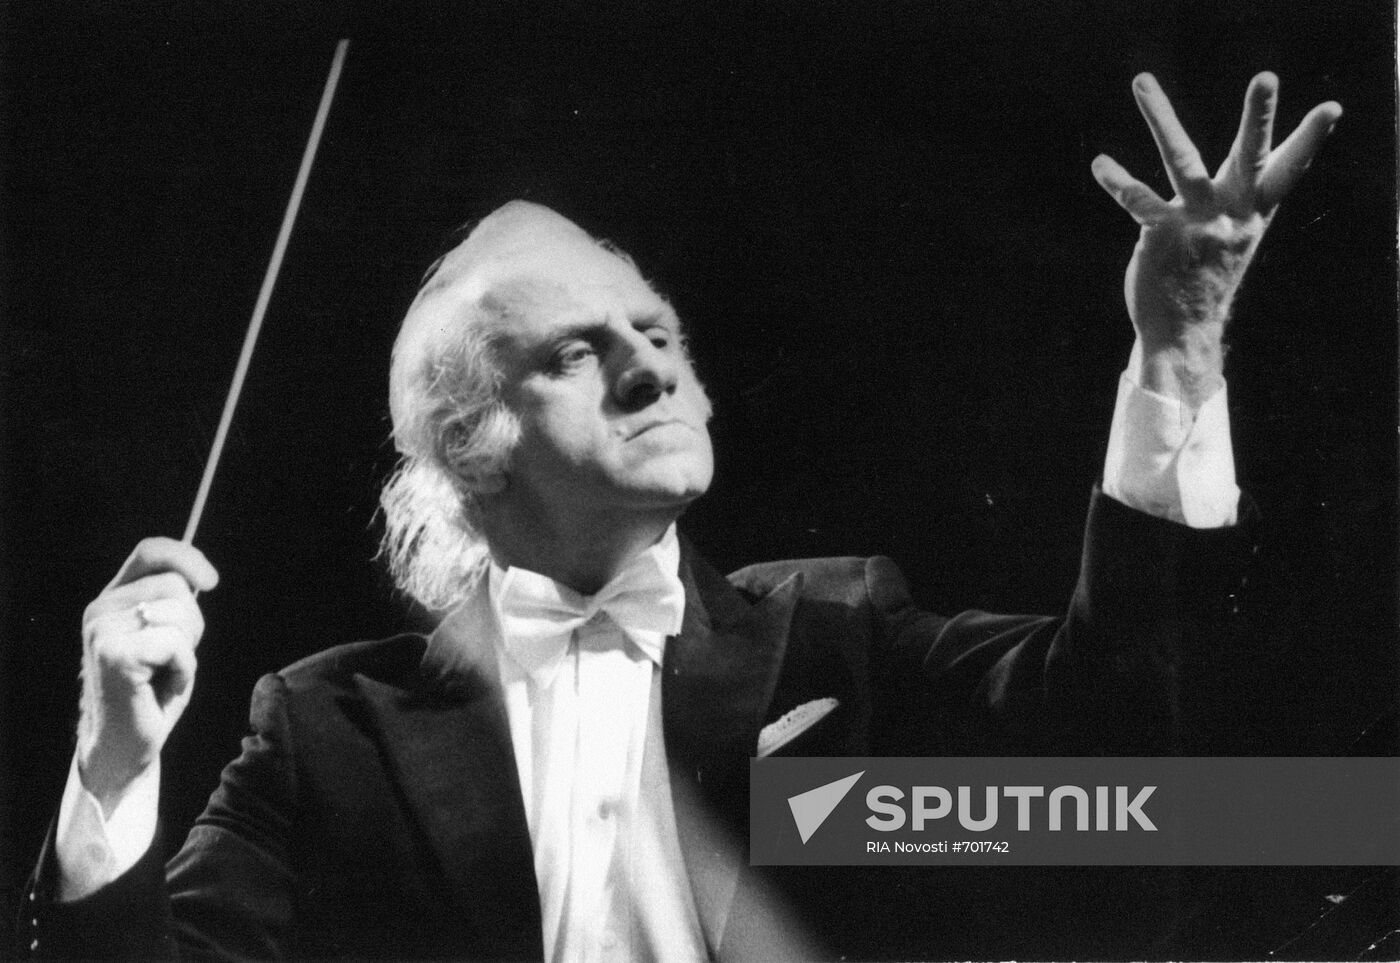 Georgian composer and conductor Dzhansug Kakhidze